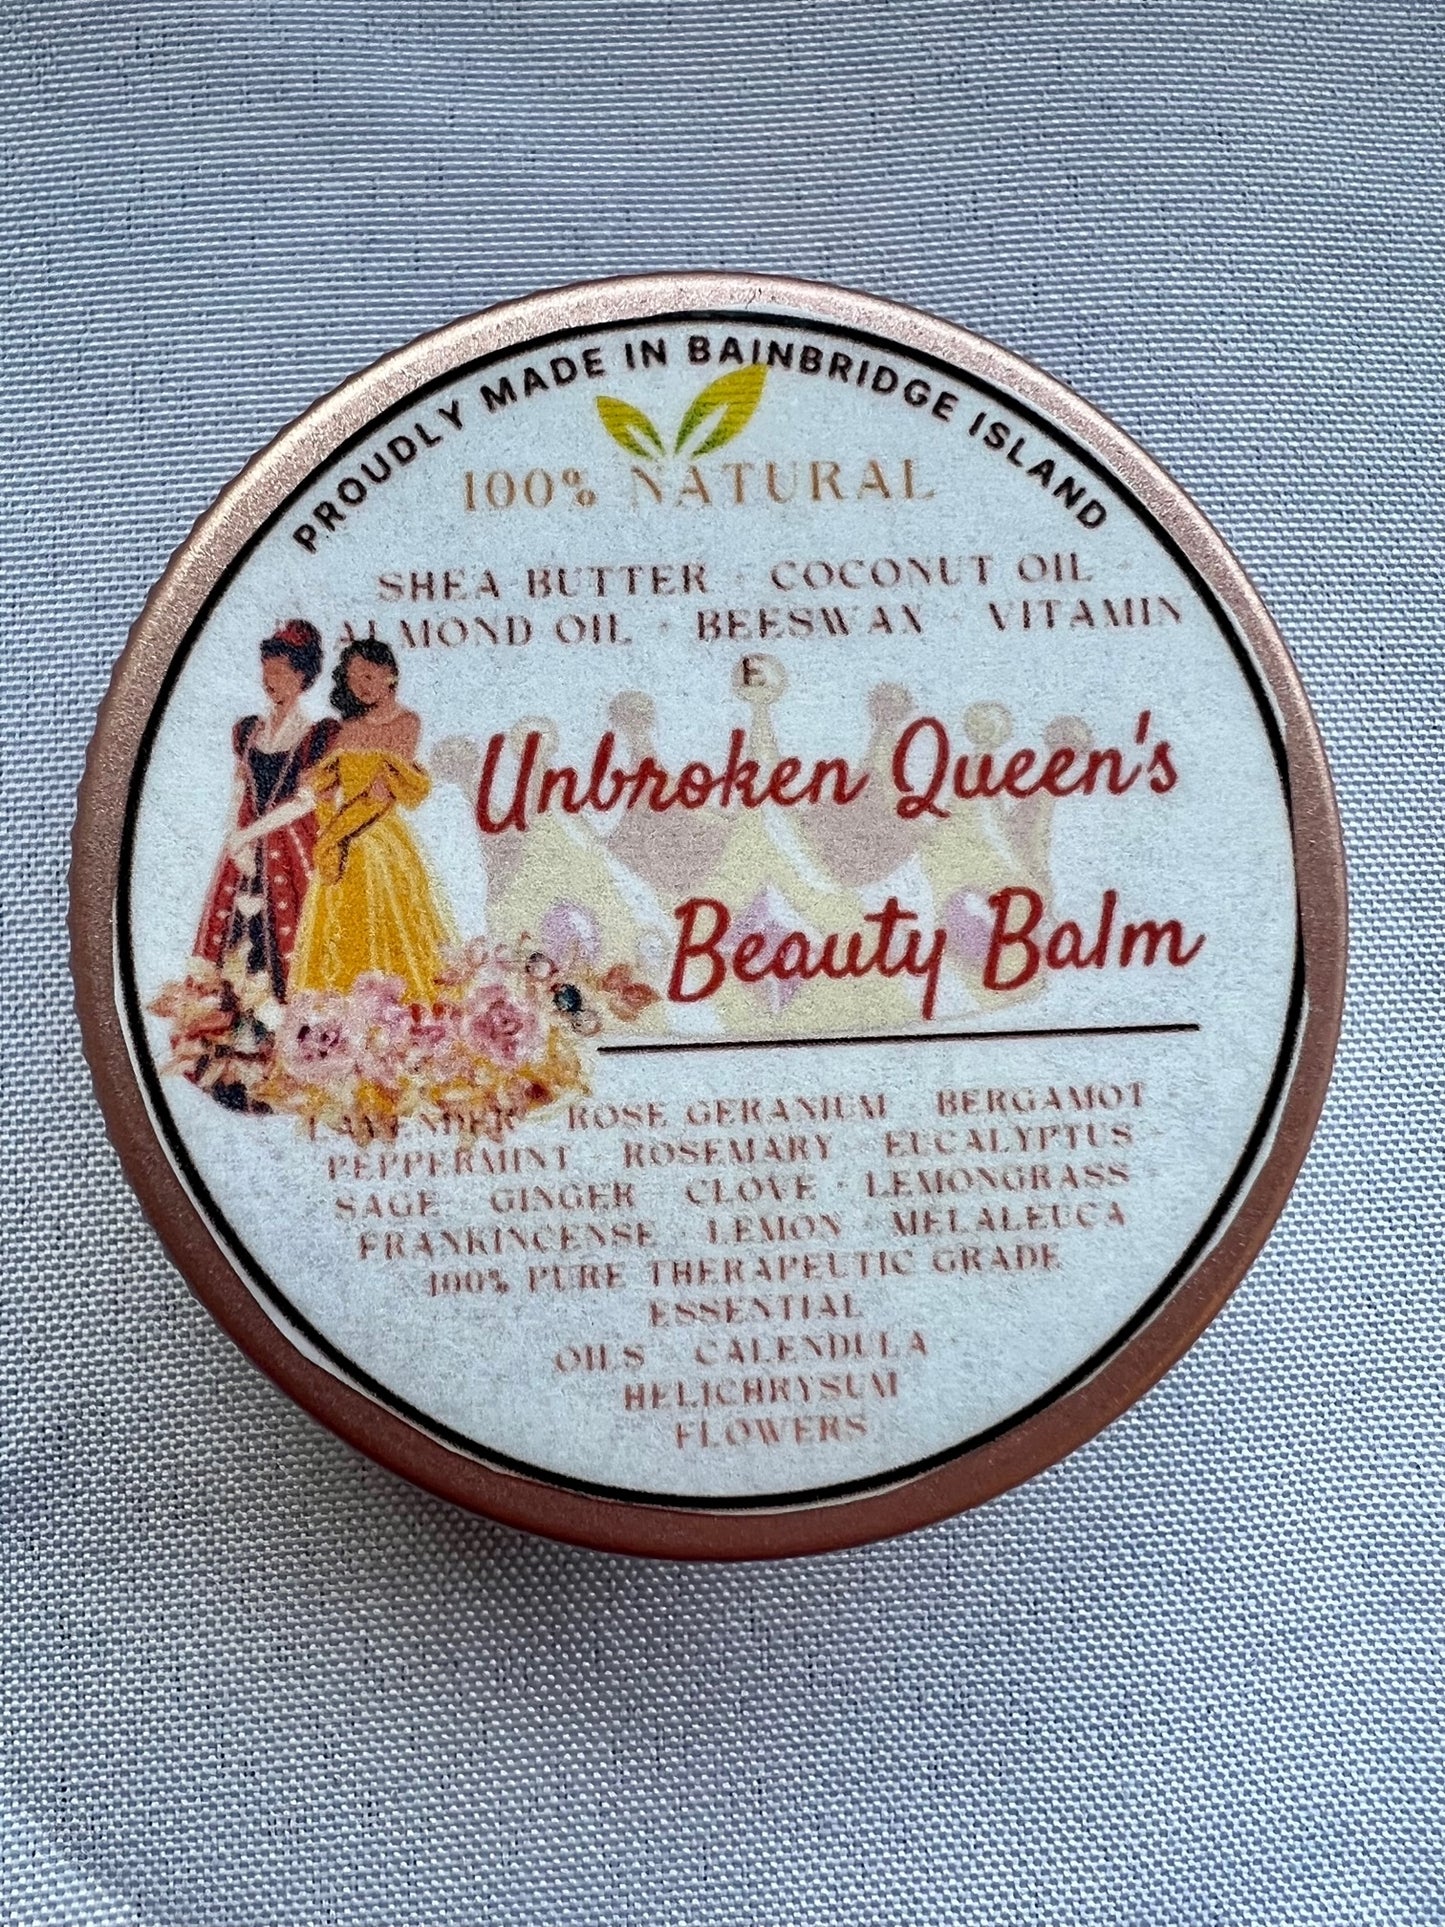 Unbroken Queen's Beauty Balm